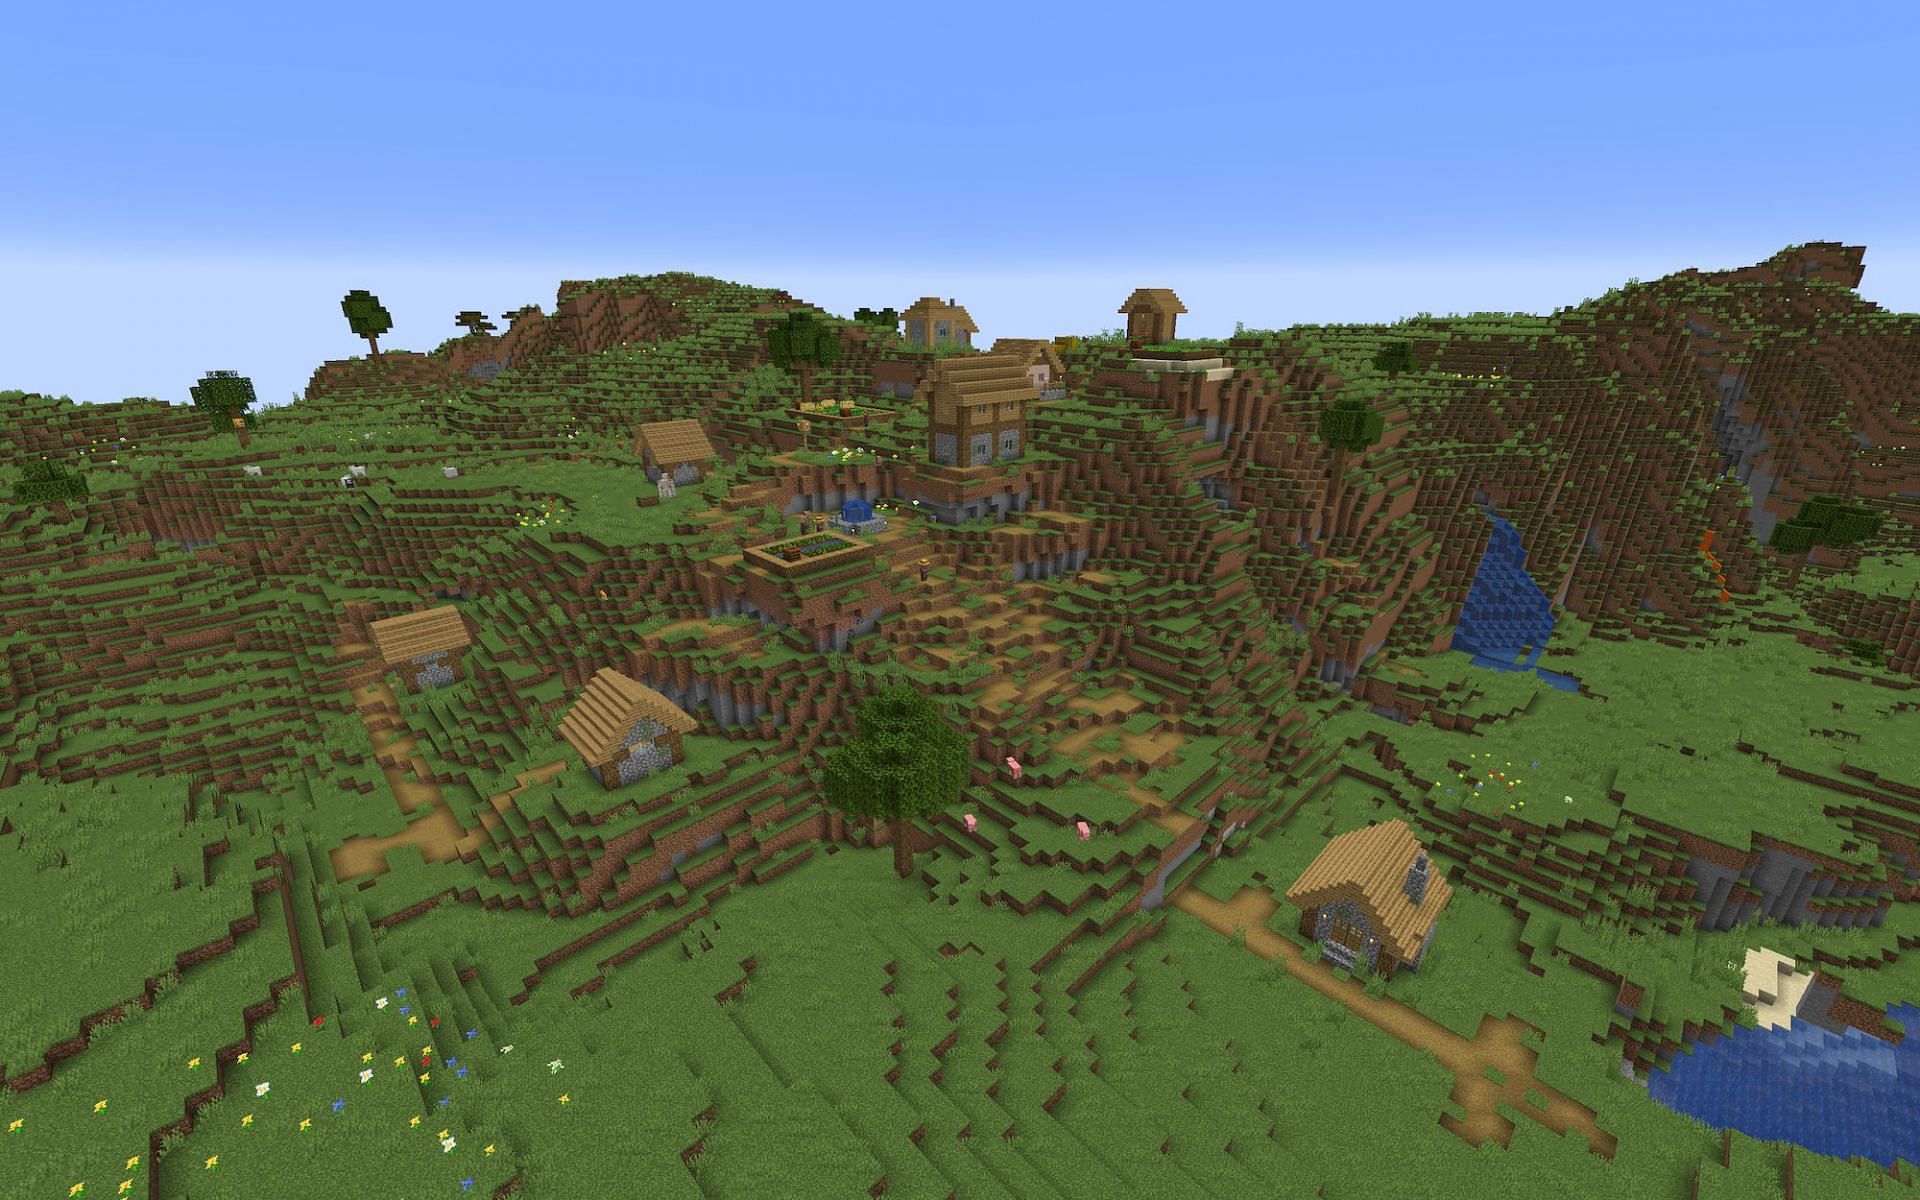 A village on a hill [Image via Minecraft]